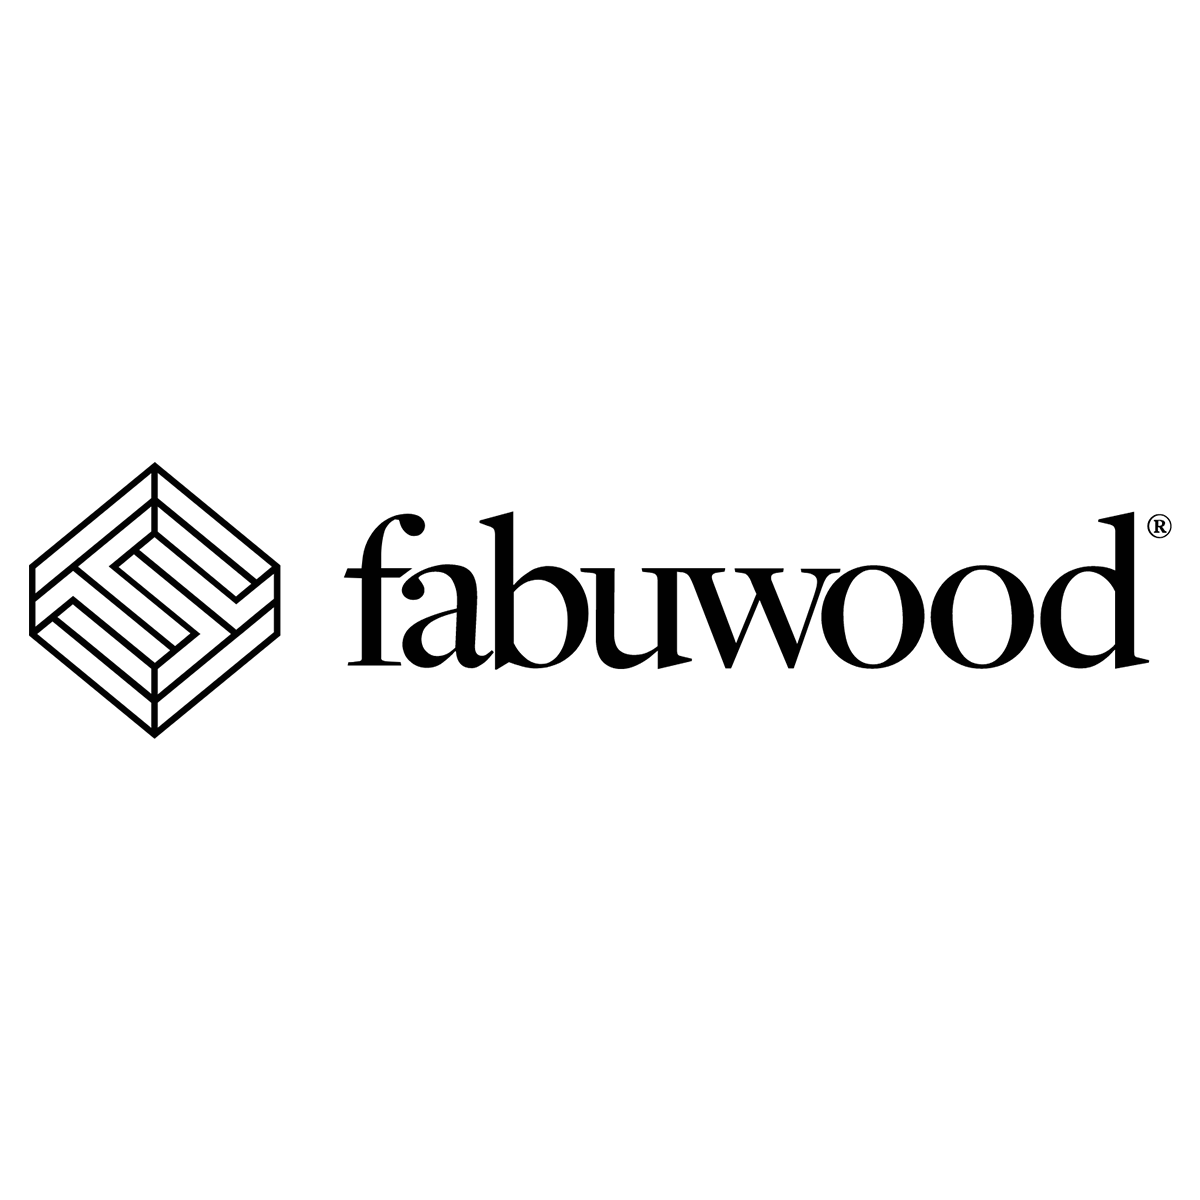 fabuwood kitchen cabinets in nj